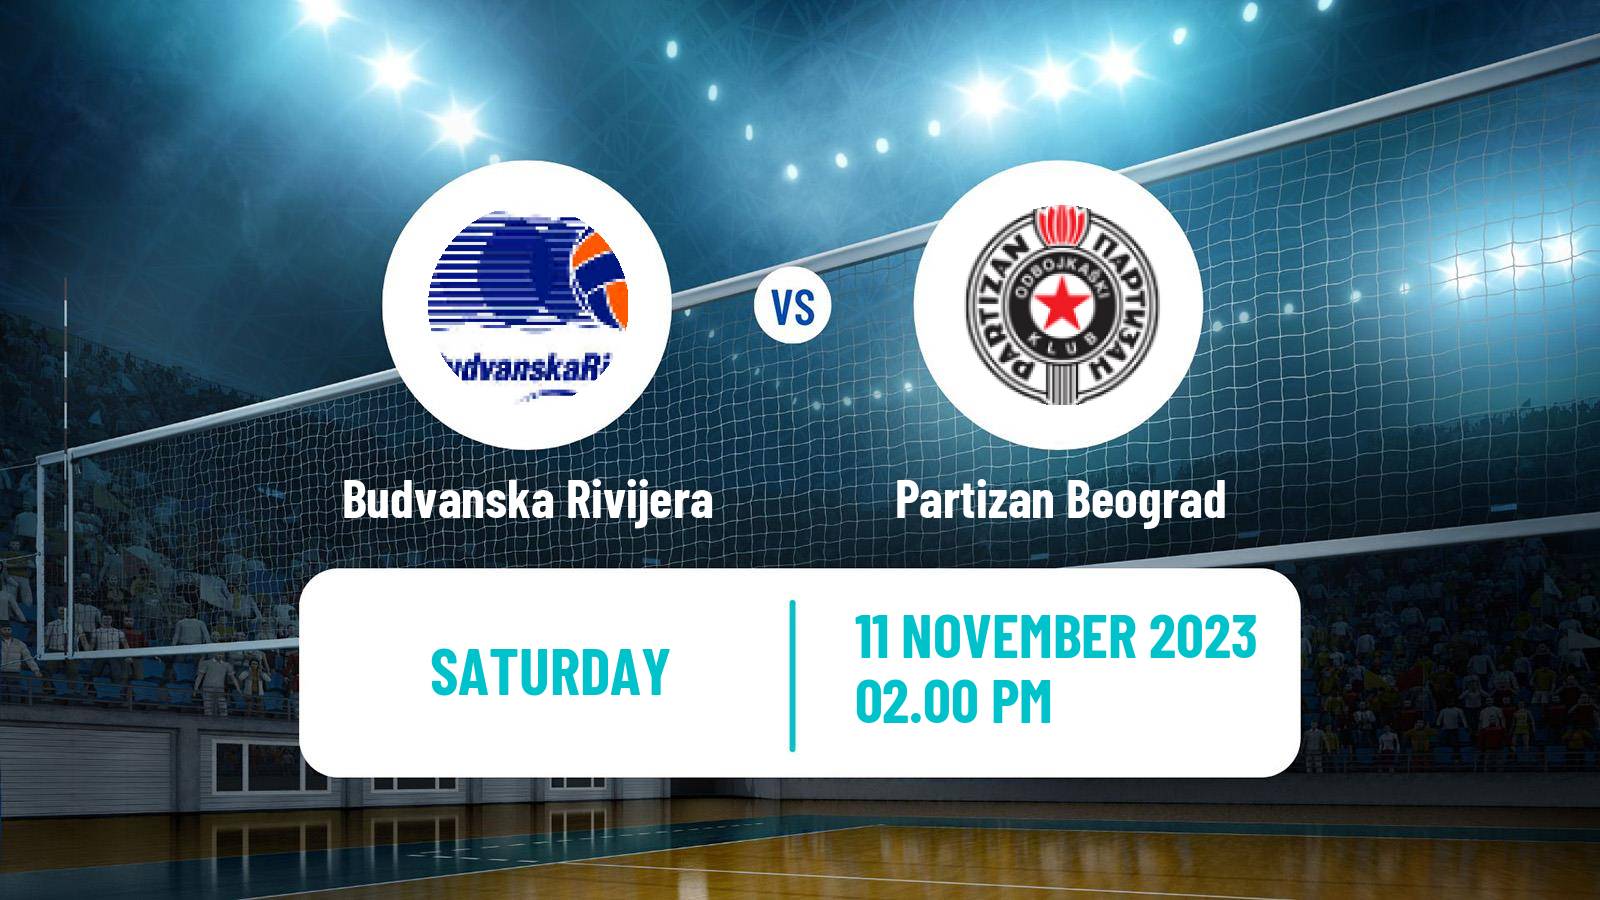 Volleyball CEV Champions League Budvanska Rivijera - Partizan Beograd